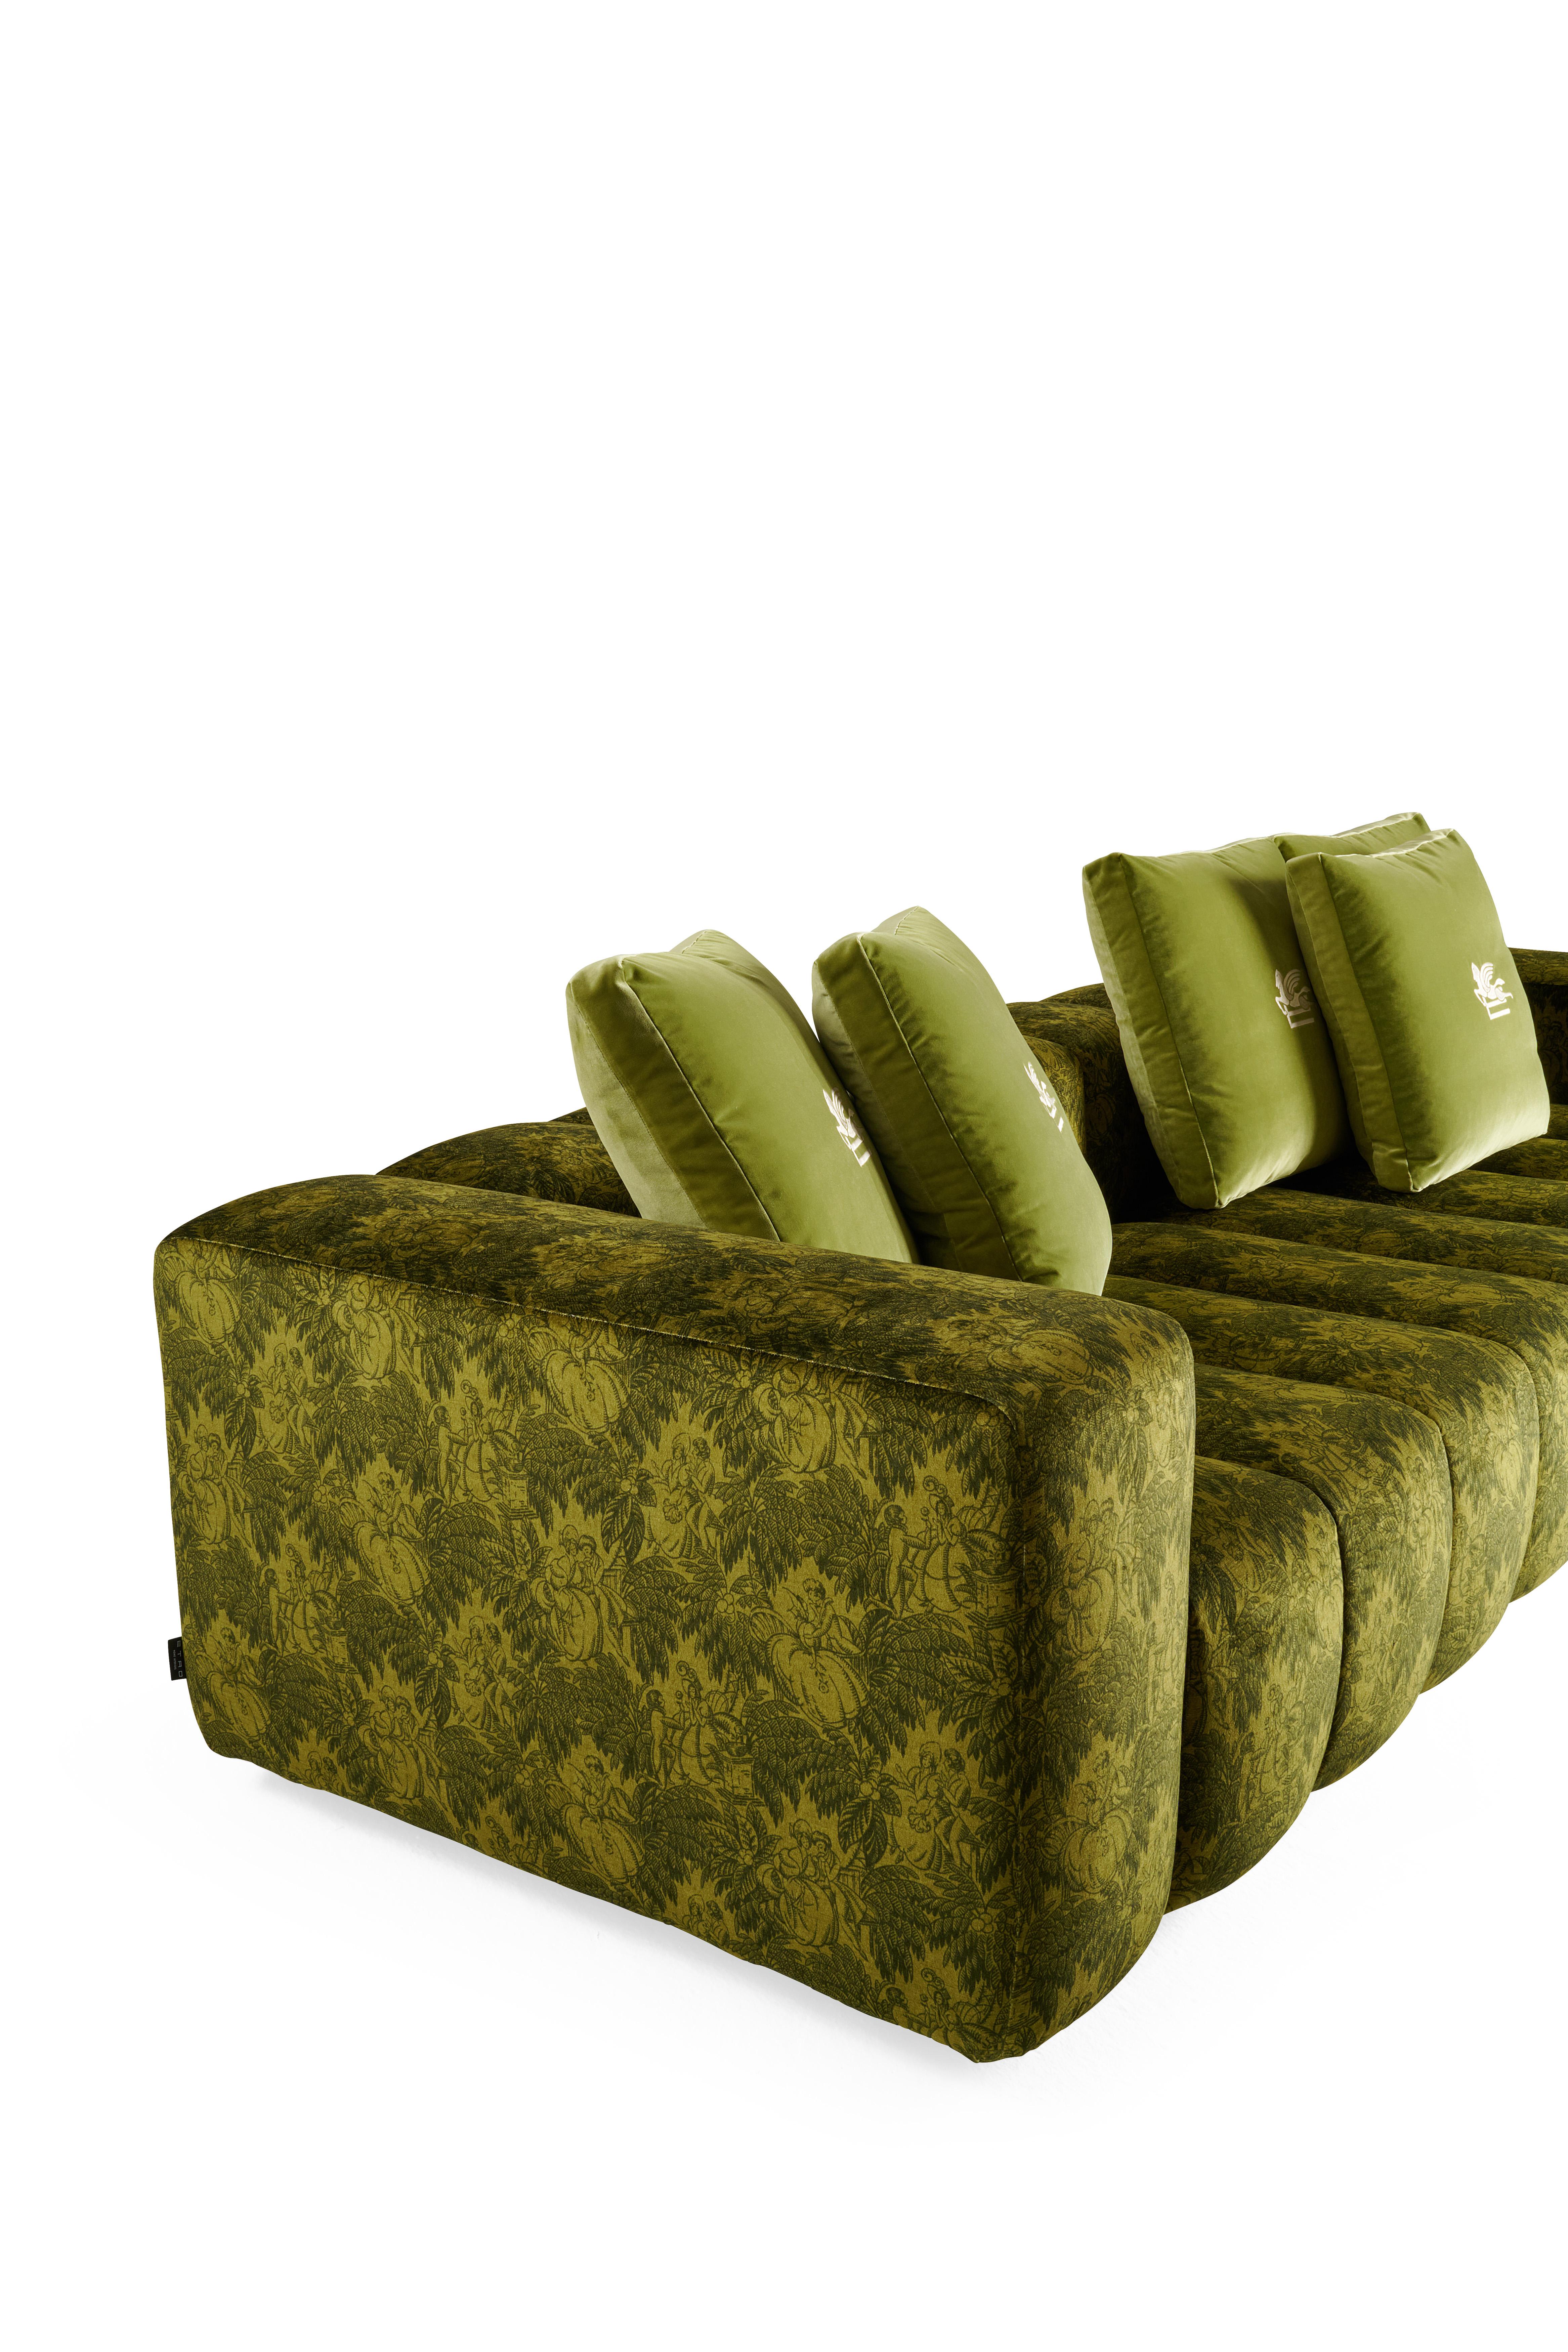 Modern 21st Century Ratio Sofa in Green Velvet by Etro Home Interiors For Sale